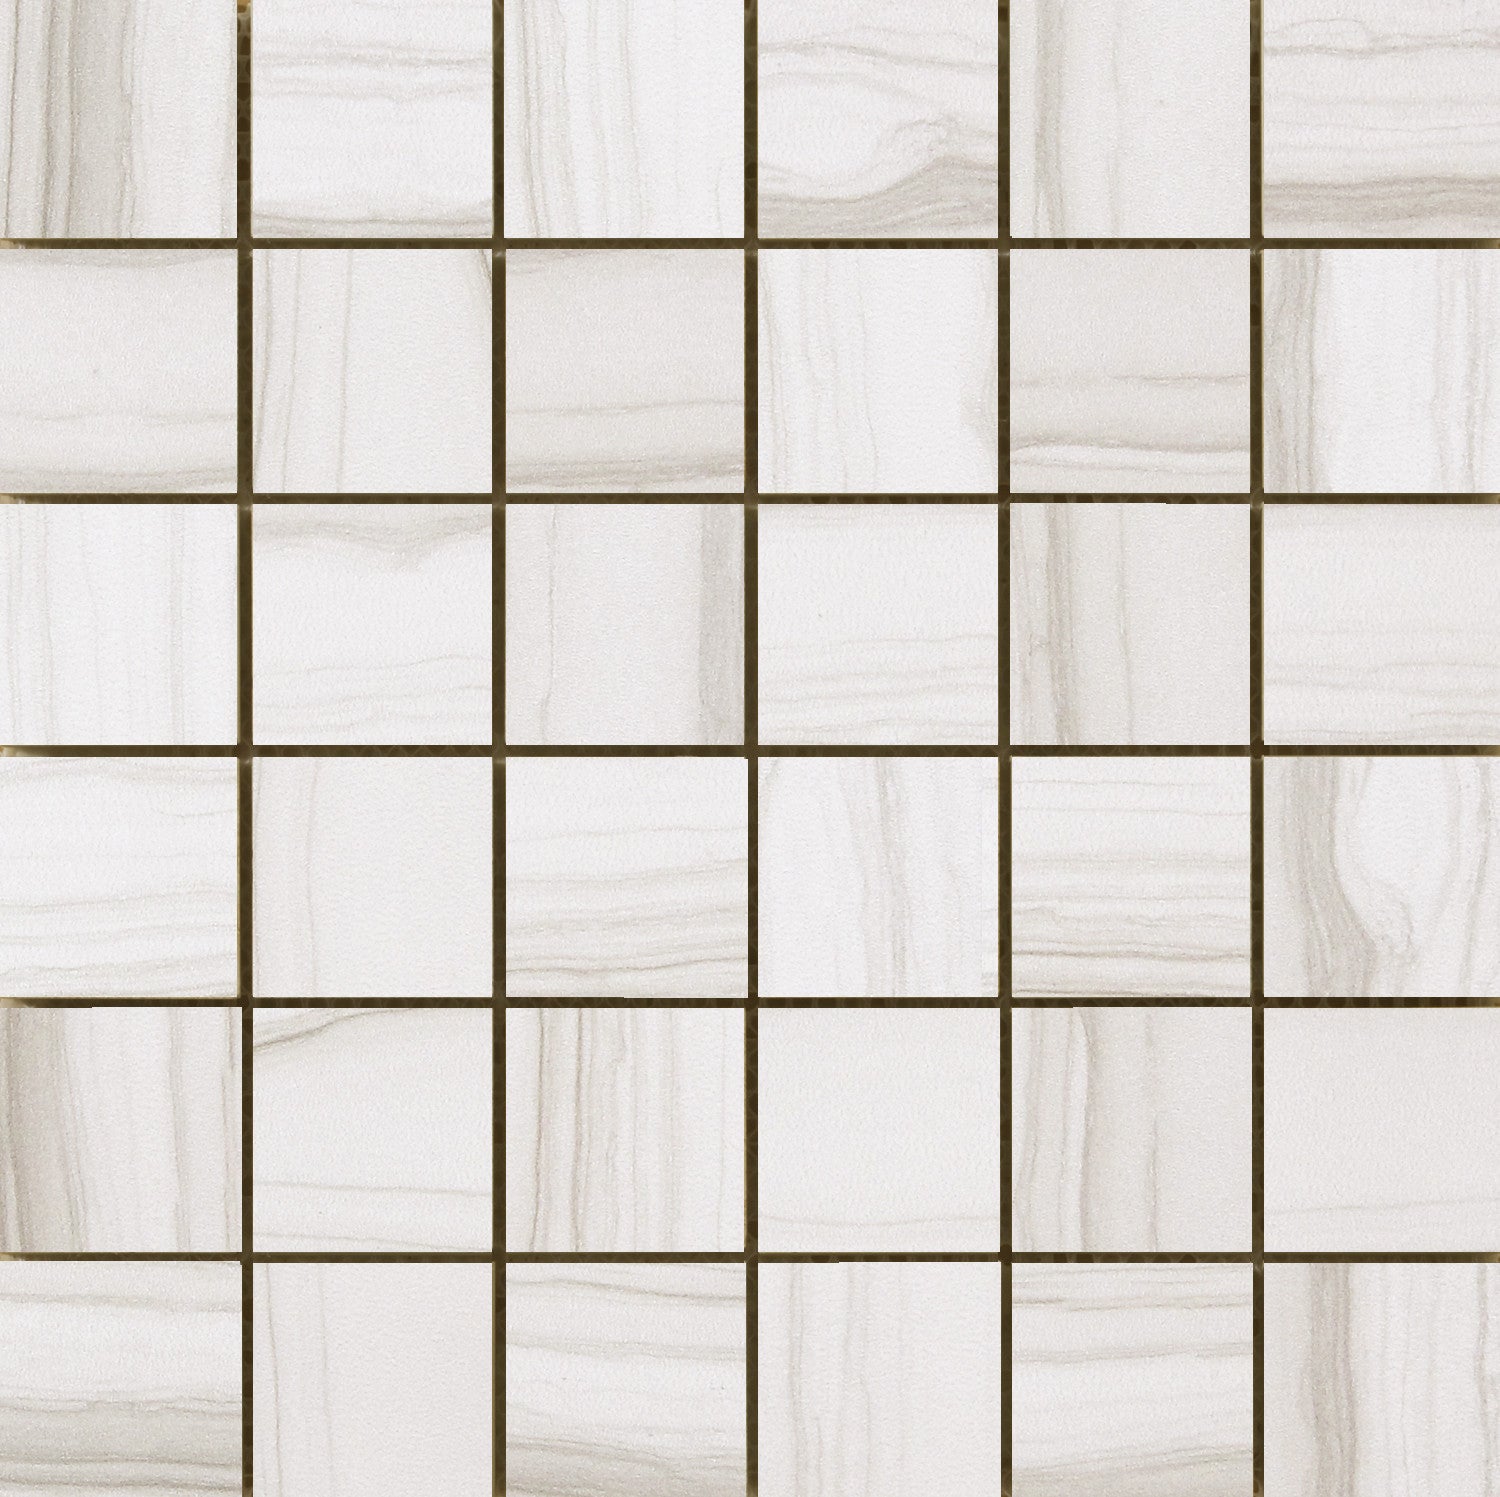 Emser ARCHIVE Memoir mosaic porcelain tile 2X2/12X12 F02ARCHME1212MOP is an Emser tile Product. 